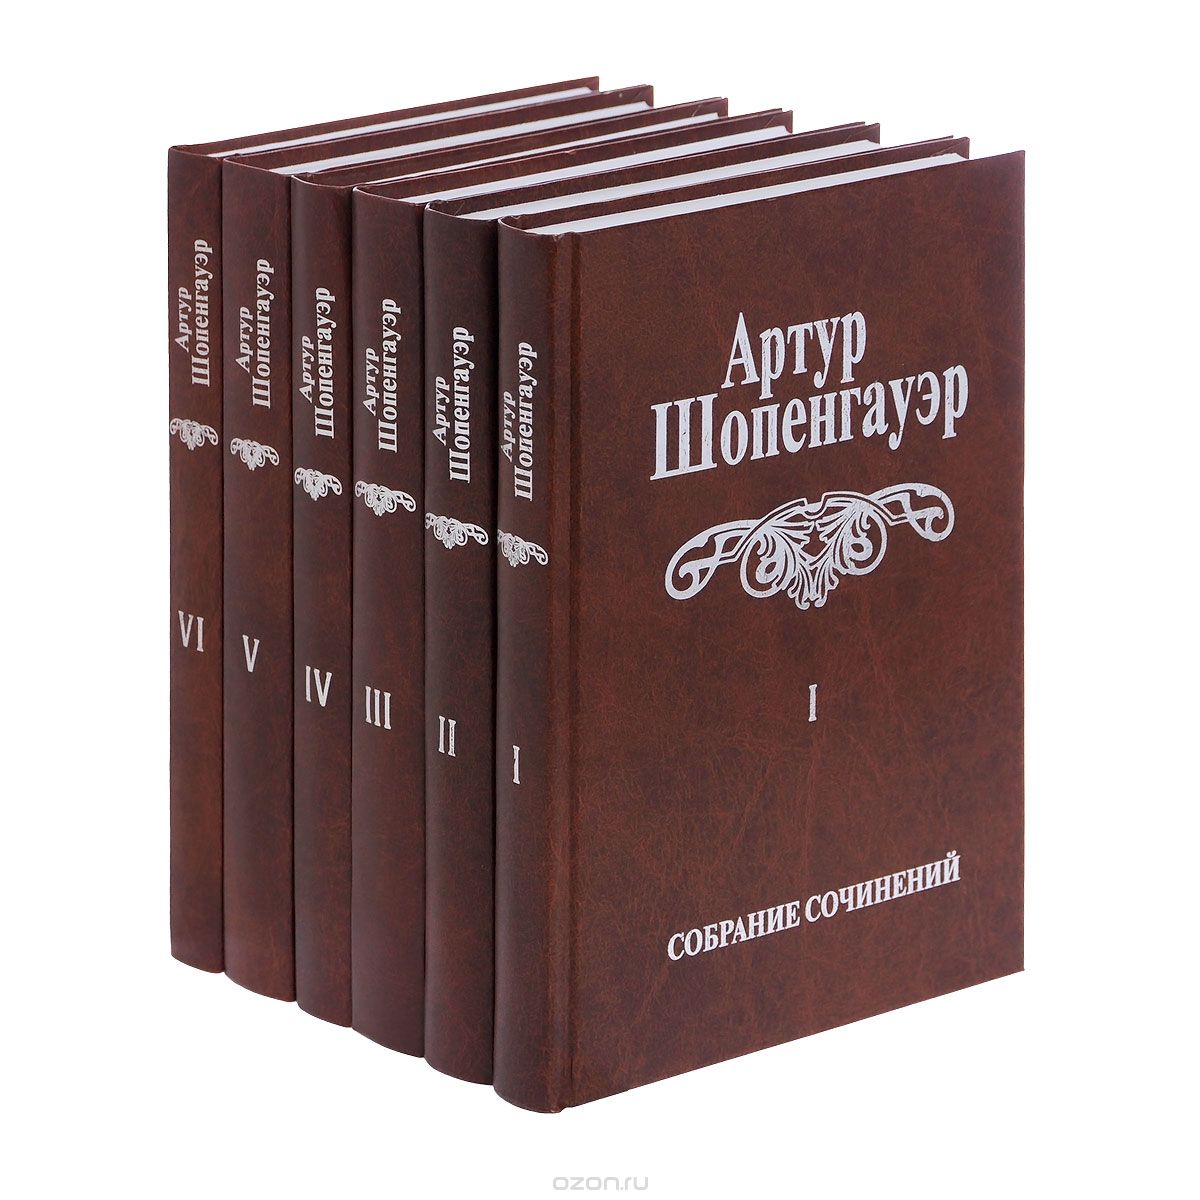 Артур Шопенгауэр. Собрание сочинений в 6 томах (комплект из 6 книг), Артур Шопенгауэр